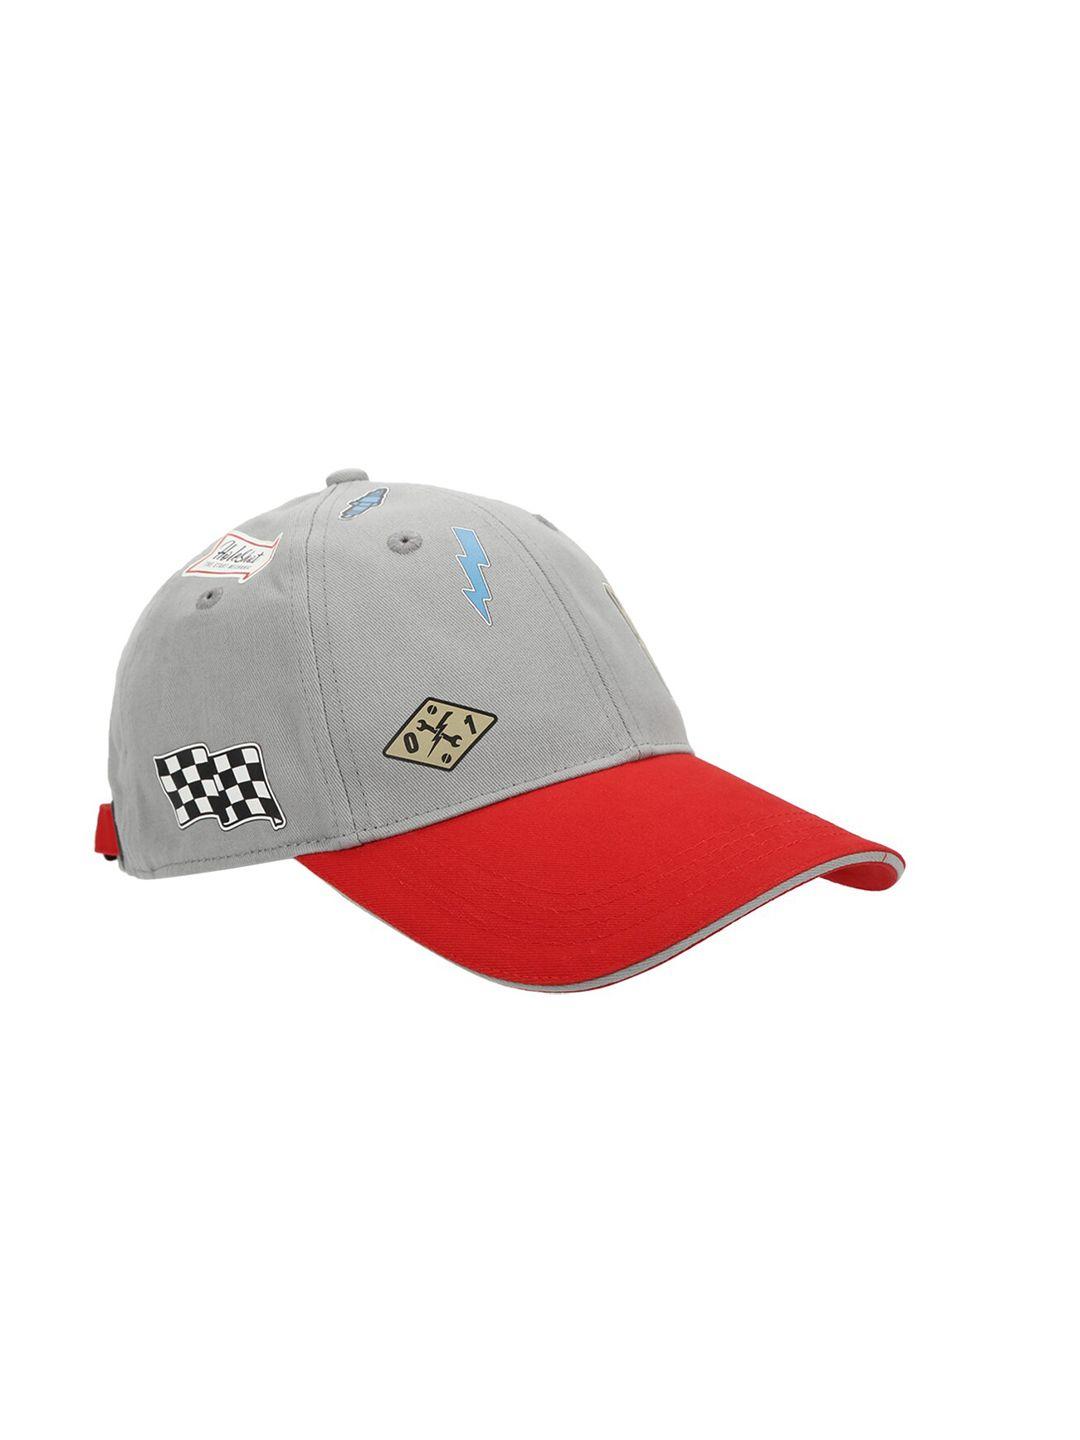 royal enfield unisex grey & red digital printed cotton baseball cap